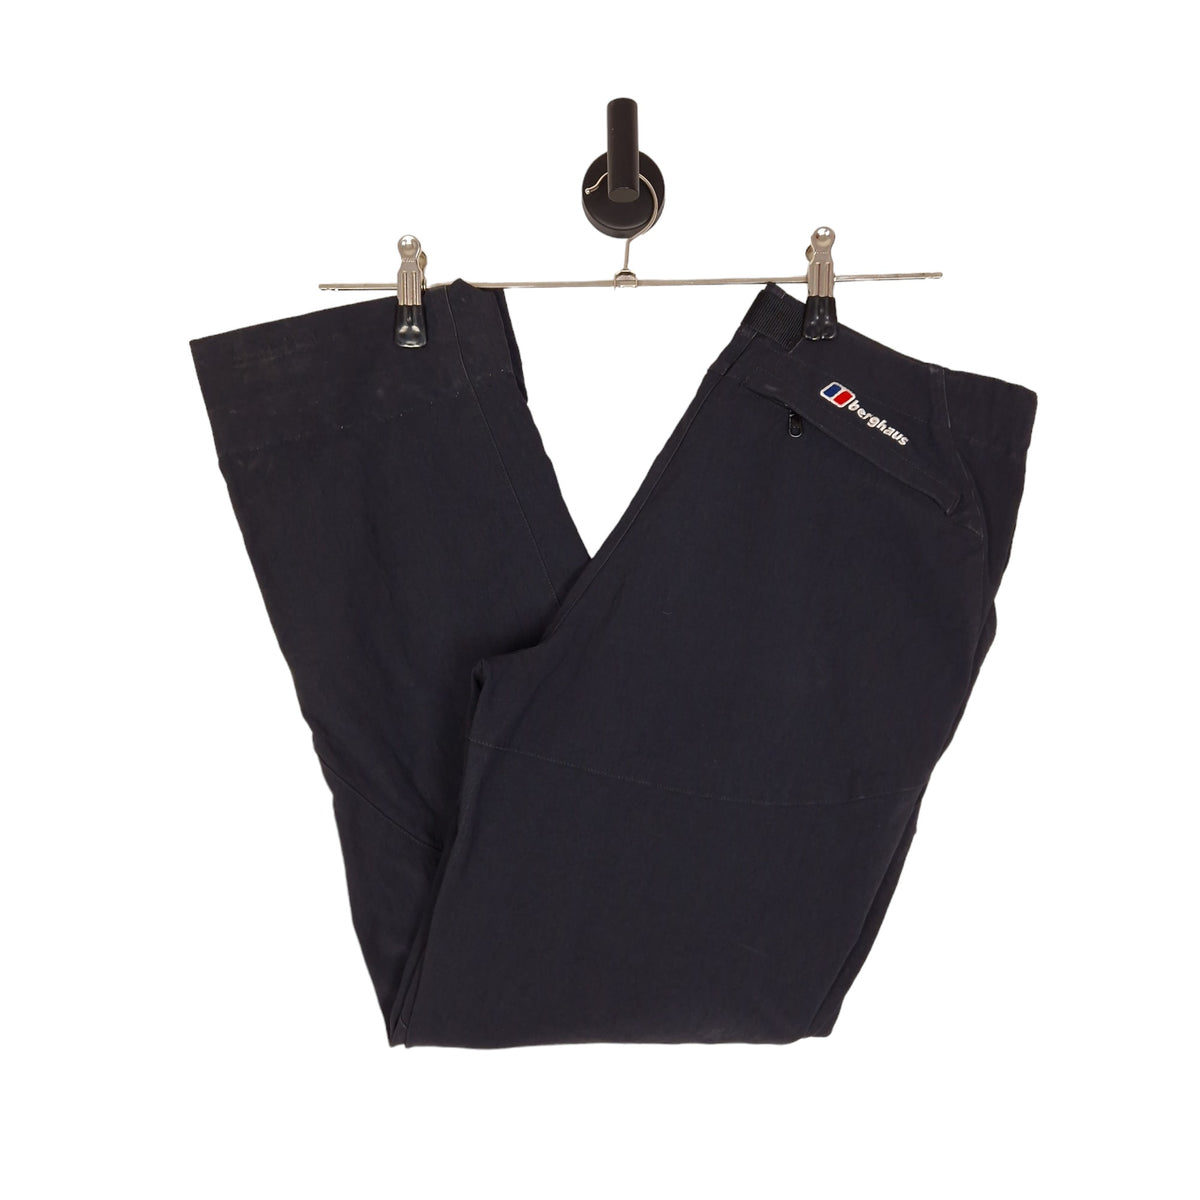 Berghaus Extrem Trousers - Size UK 10